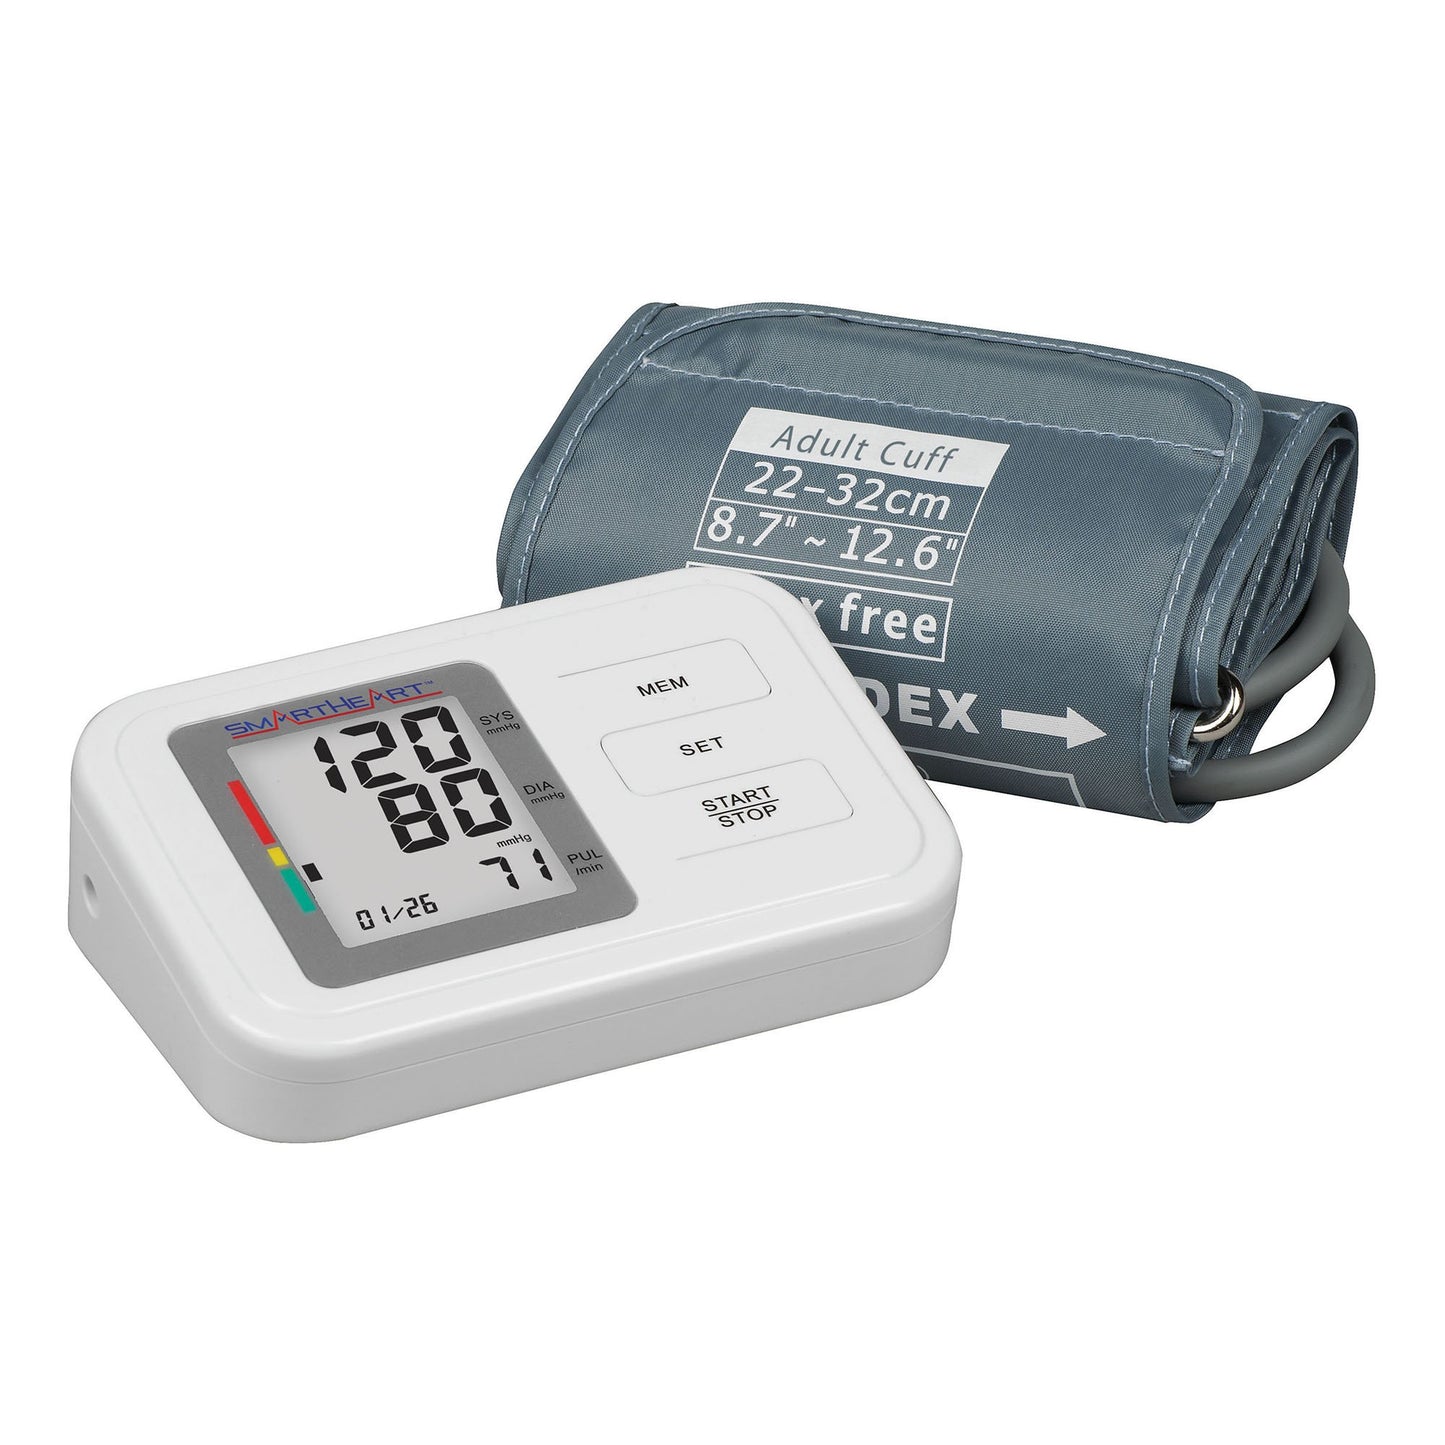 SmartHeart Home Automatic Digital Blood Pressure Monitor